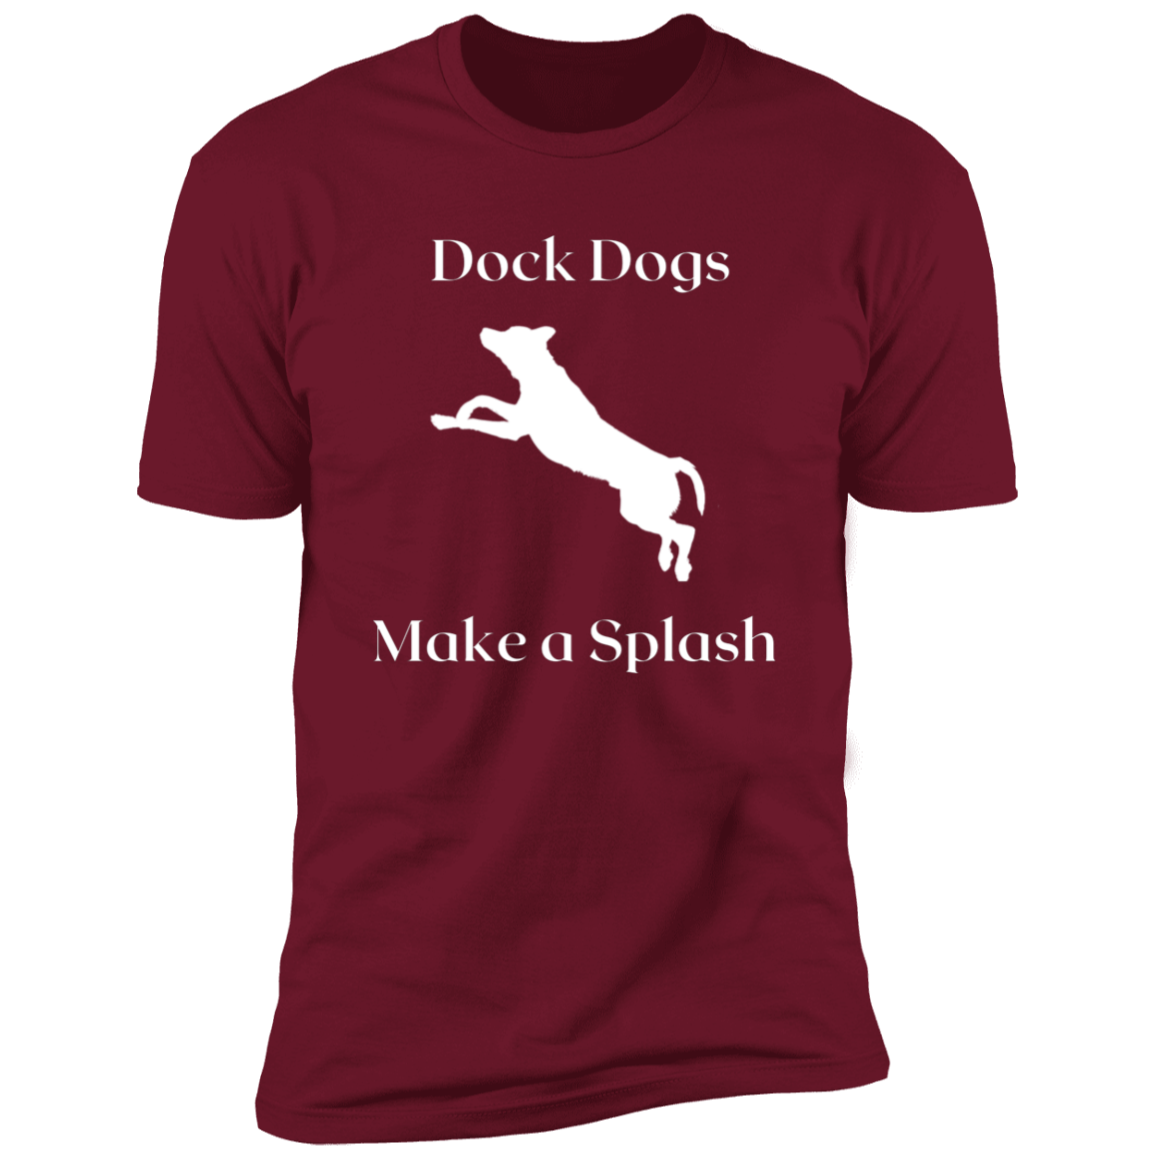 Dock Dogs Make a Splash Dock Diving t-shirt, Dock diving shirt, in cardinal red